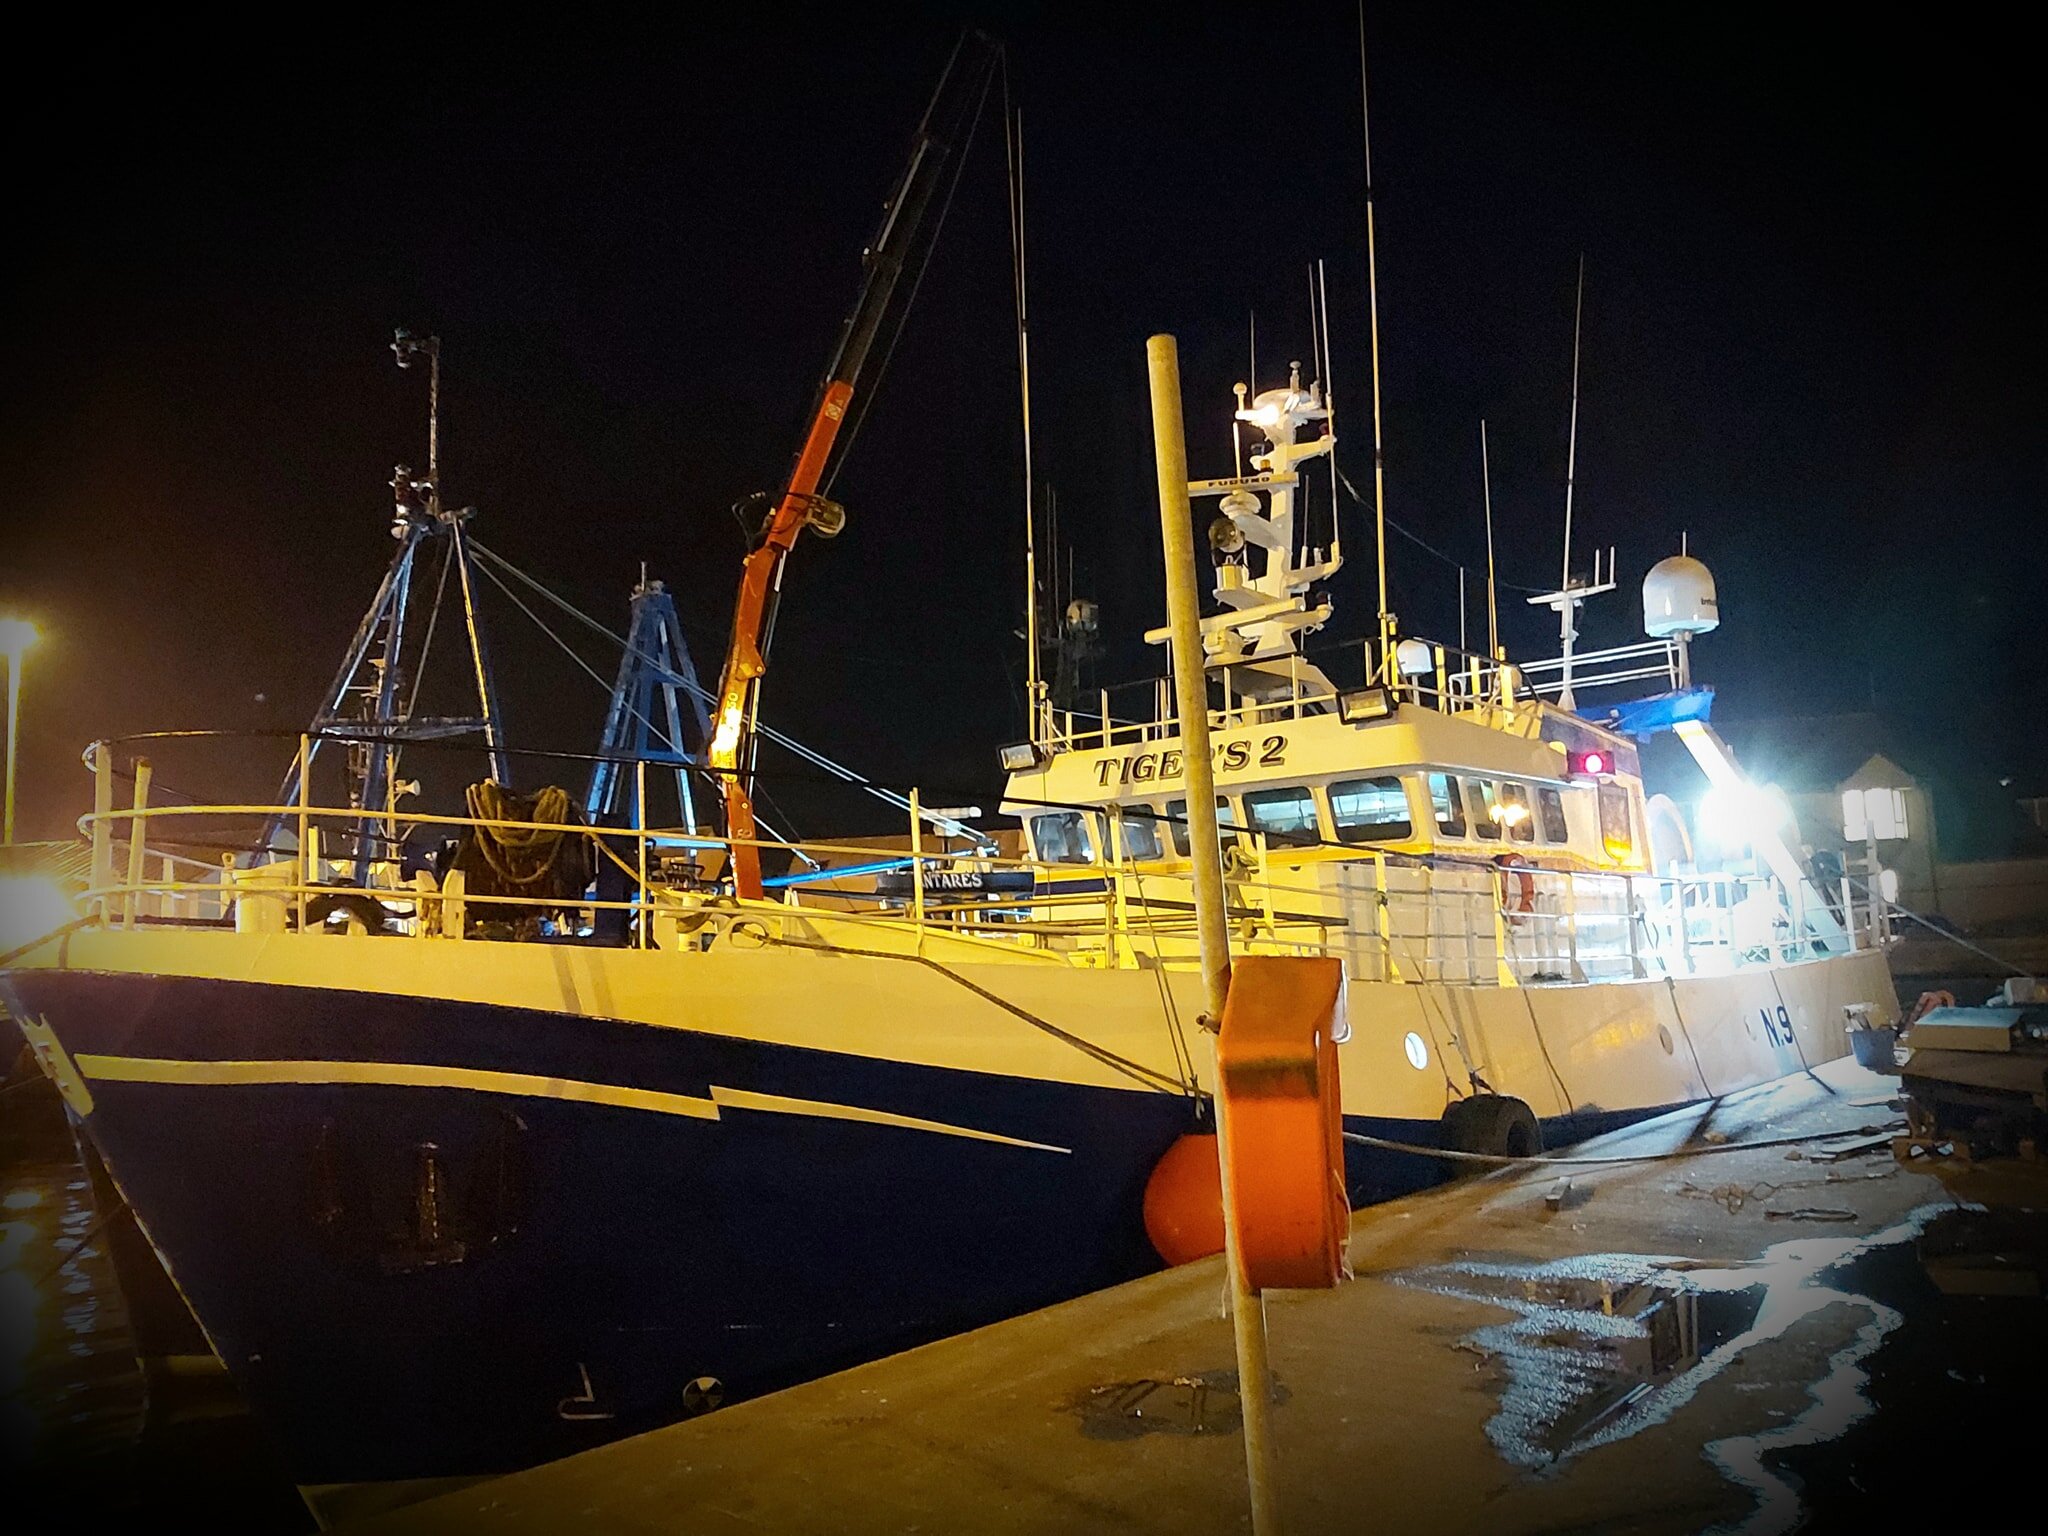 TIGERS IIType : Trawler à coque métalliqueTaille : 25 x 8mConstruit : 1986